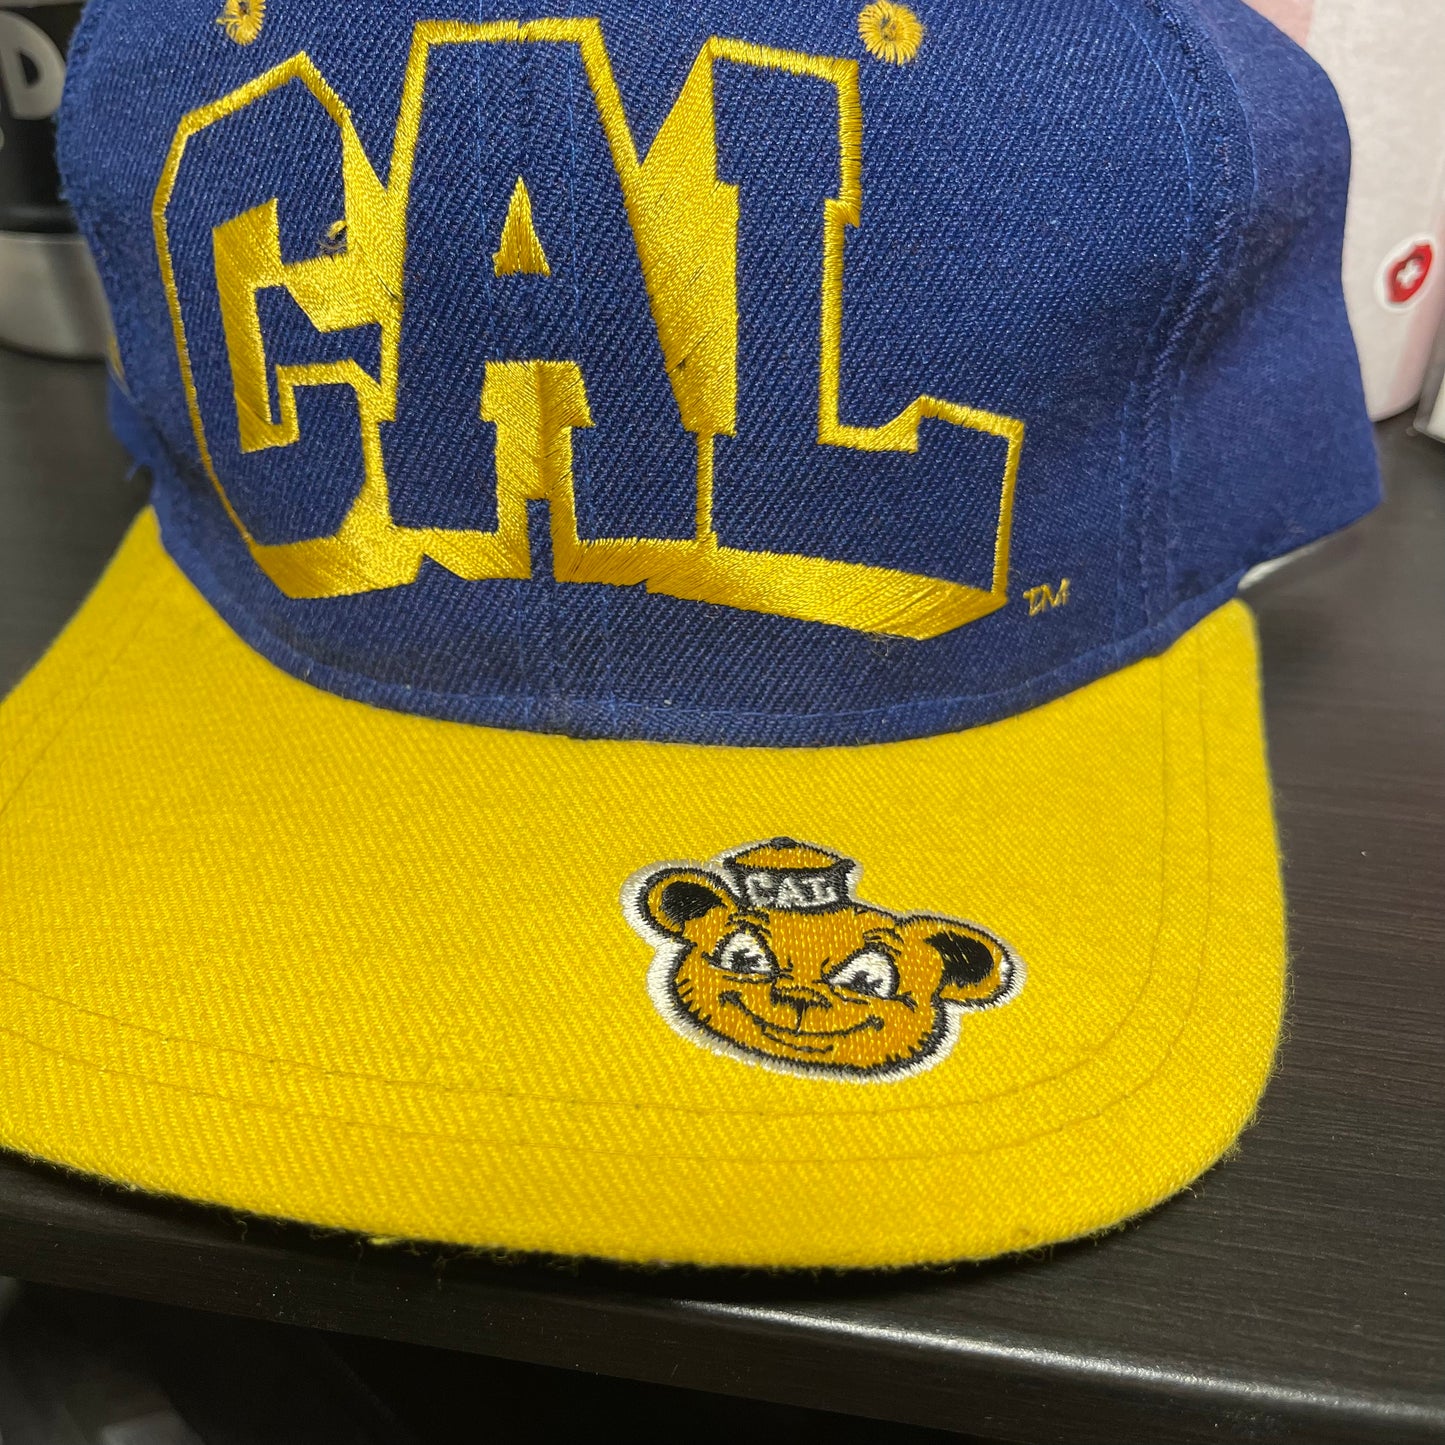 Vintage 90’s California Berkeley Golden Bears Snapback Hat (RARE)